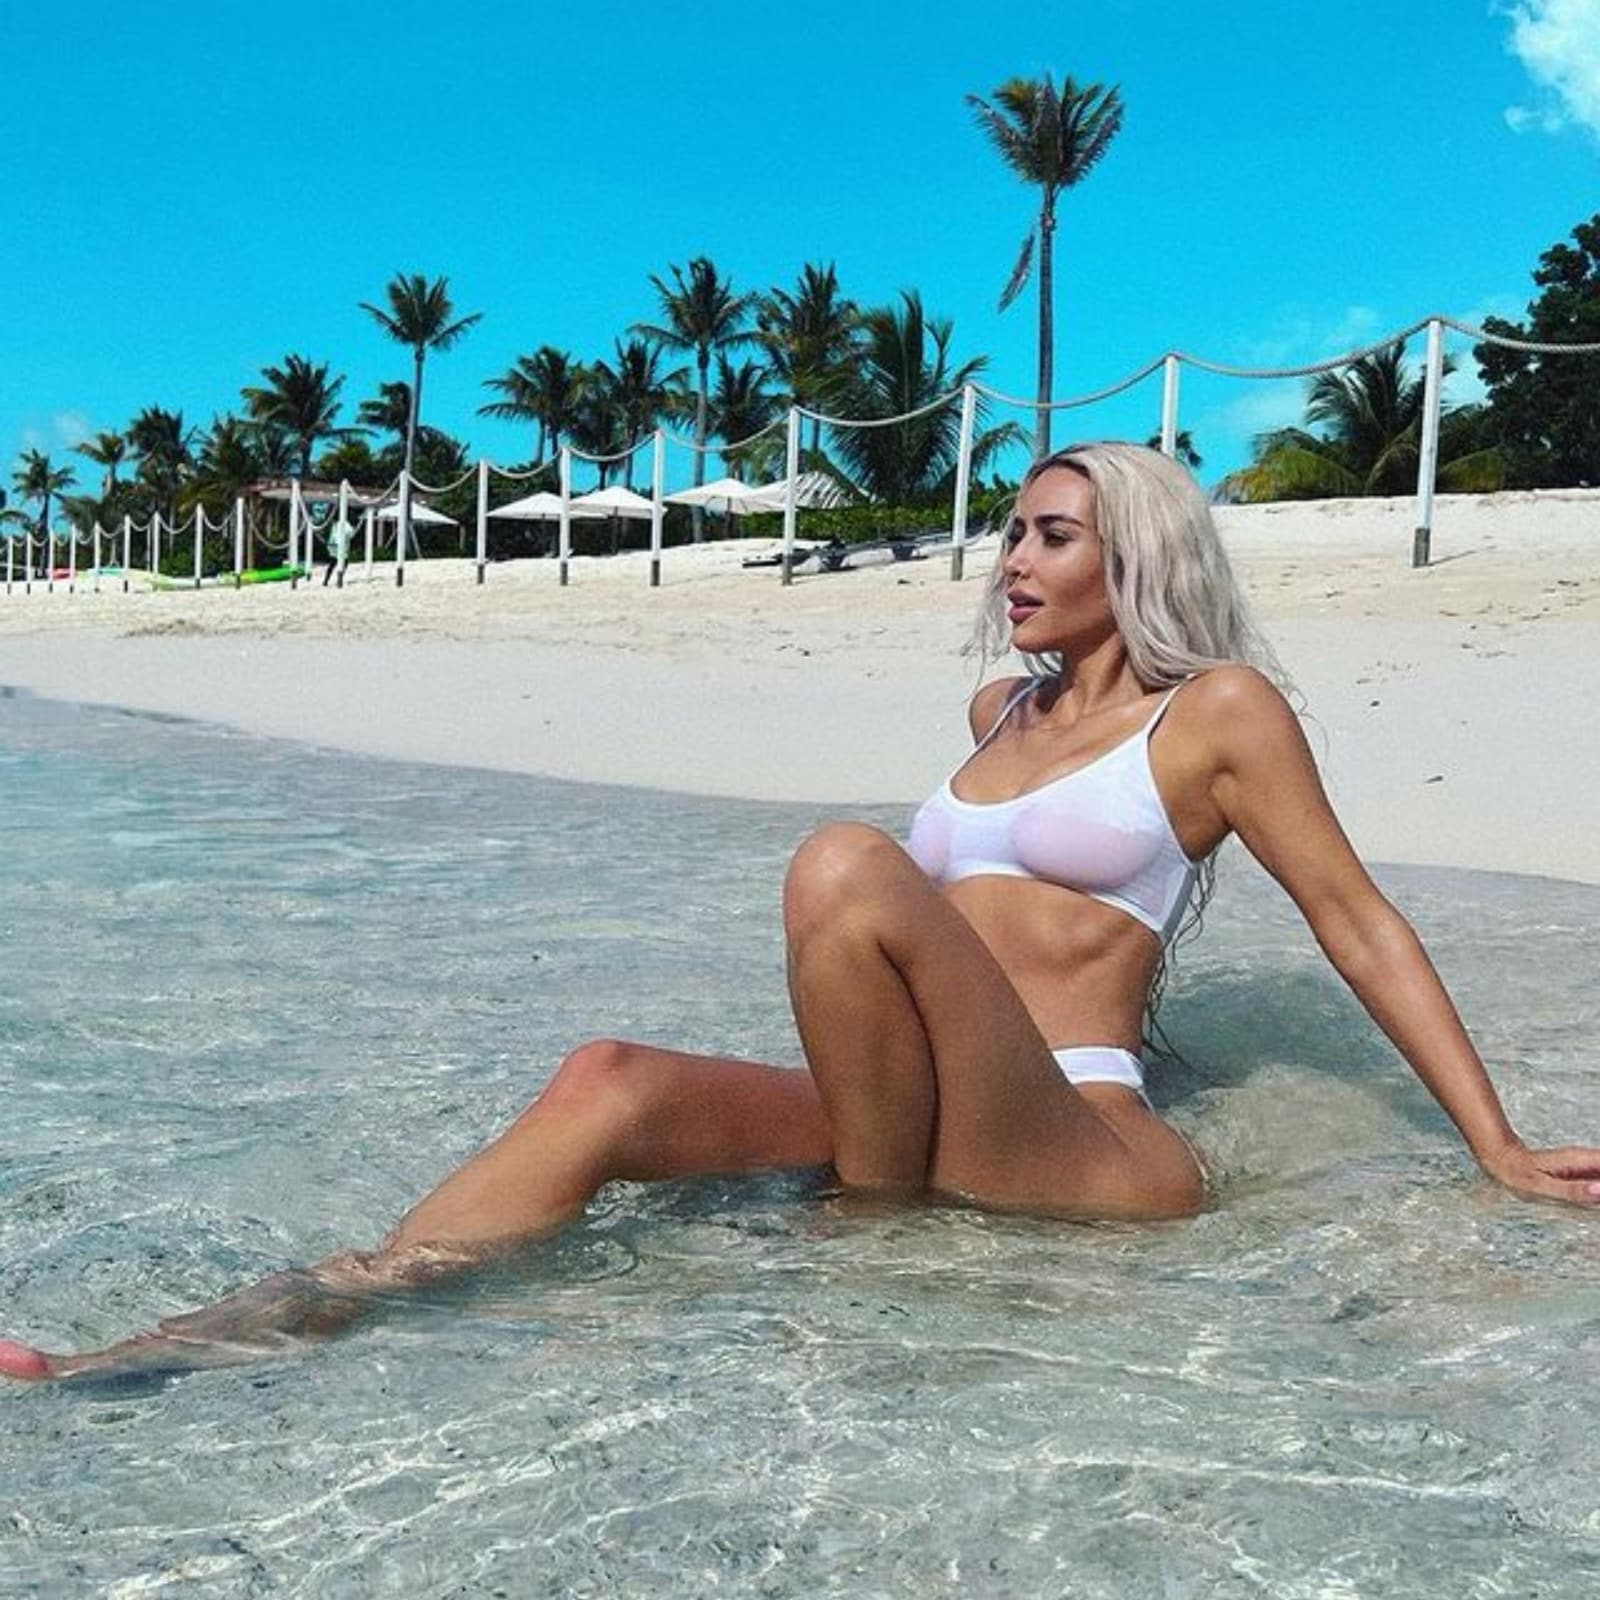 Kim Kardashian takes off her bikini bottoms while posing in a